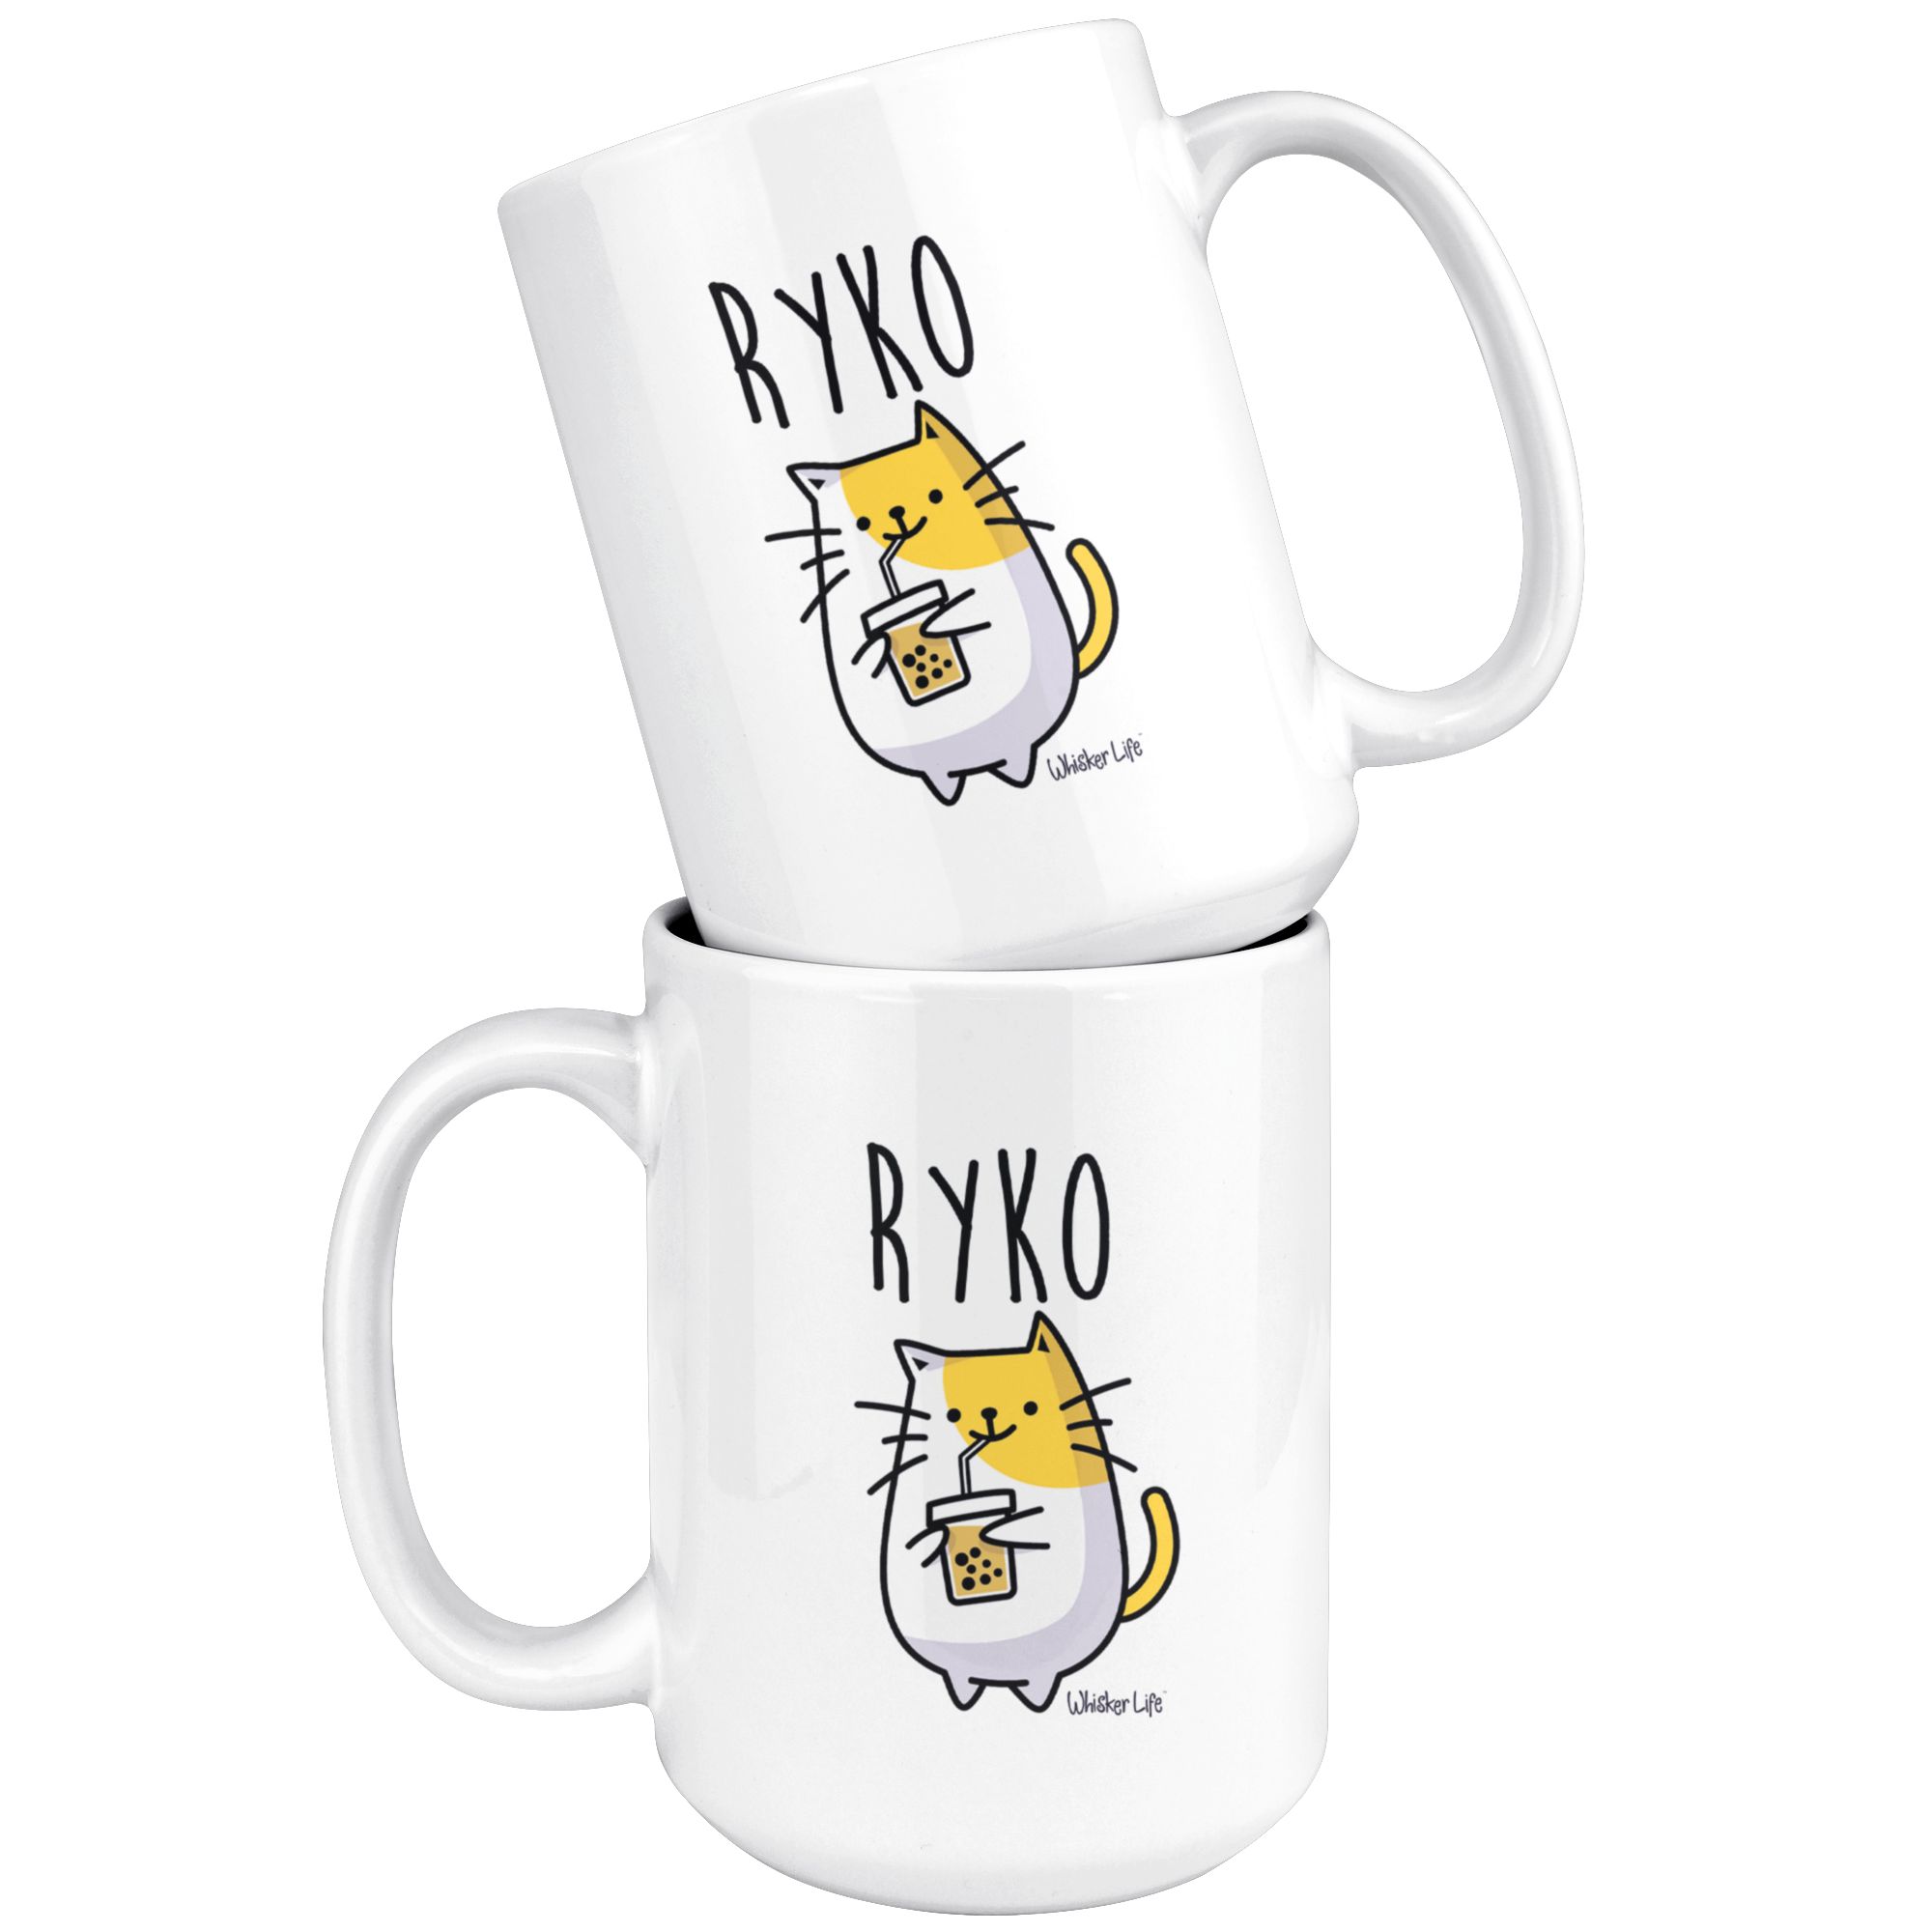 Ryko Drinking Coffee - Large 15oz Coffee Mug